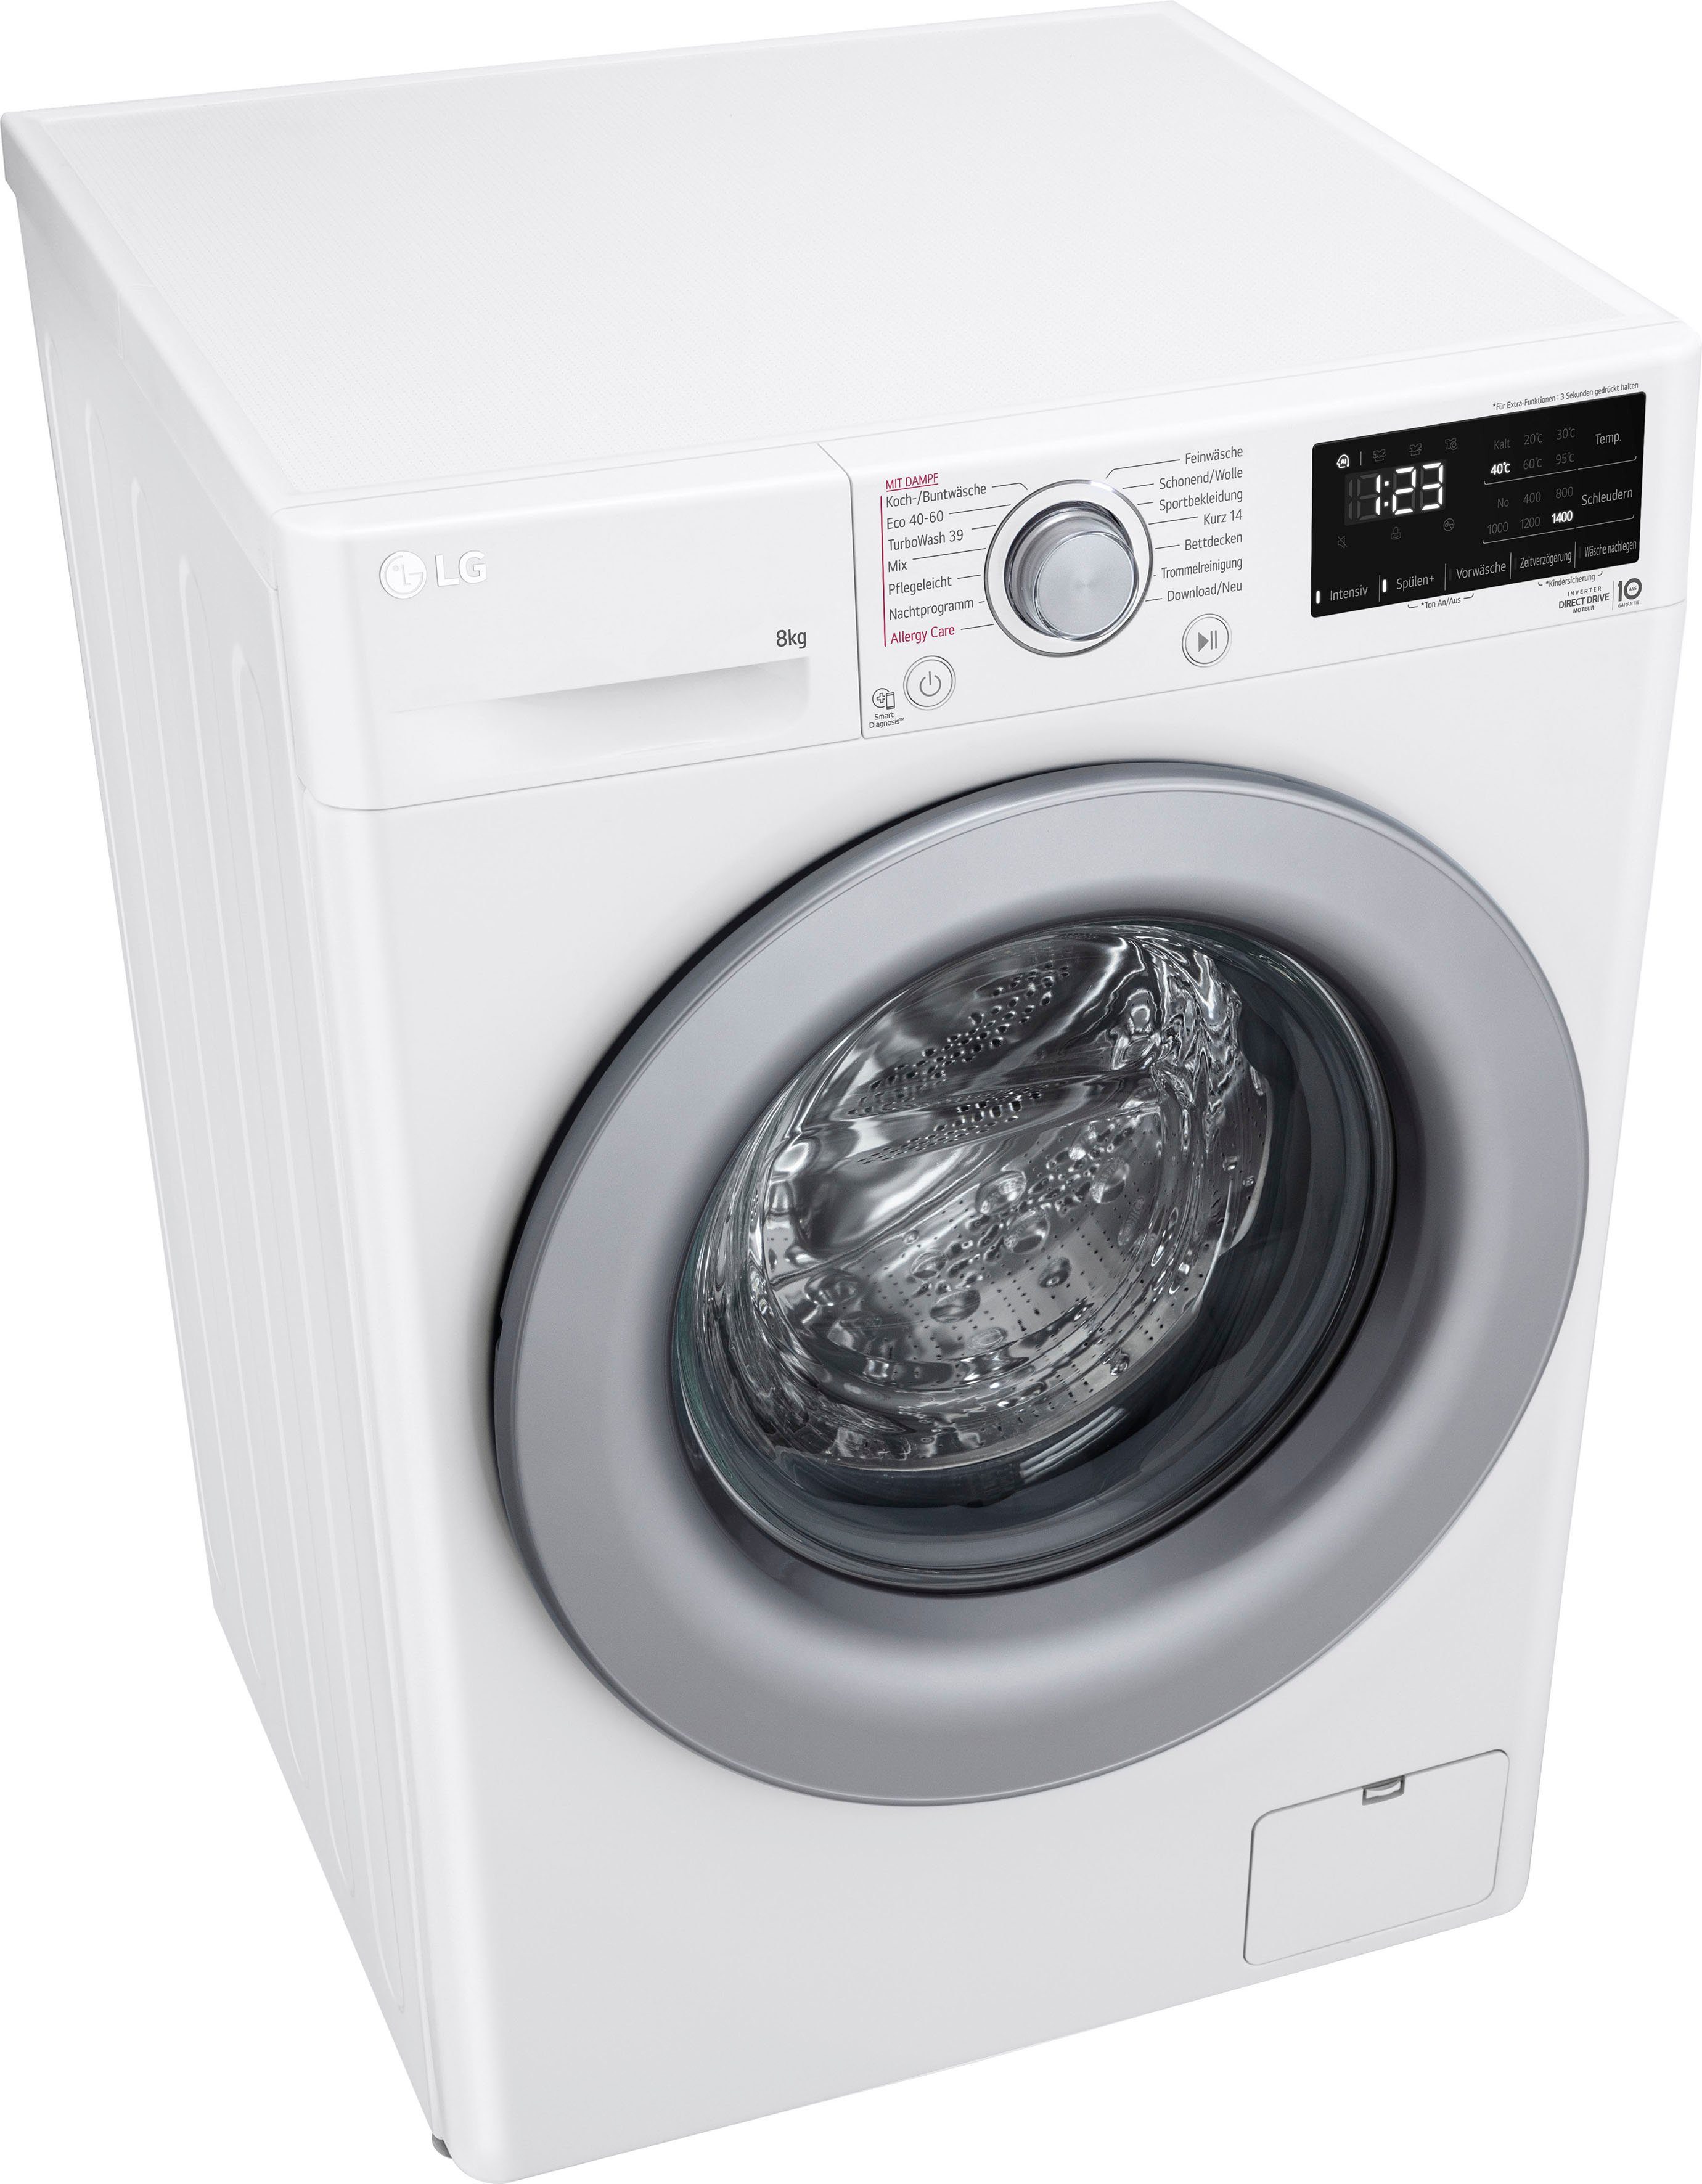 8 LG kg, U/min F4WV3284, 1400 Serie 3 Waschmaschine